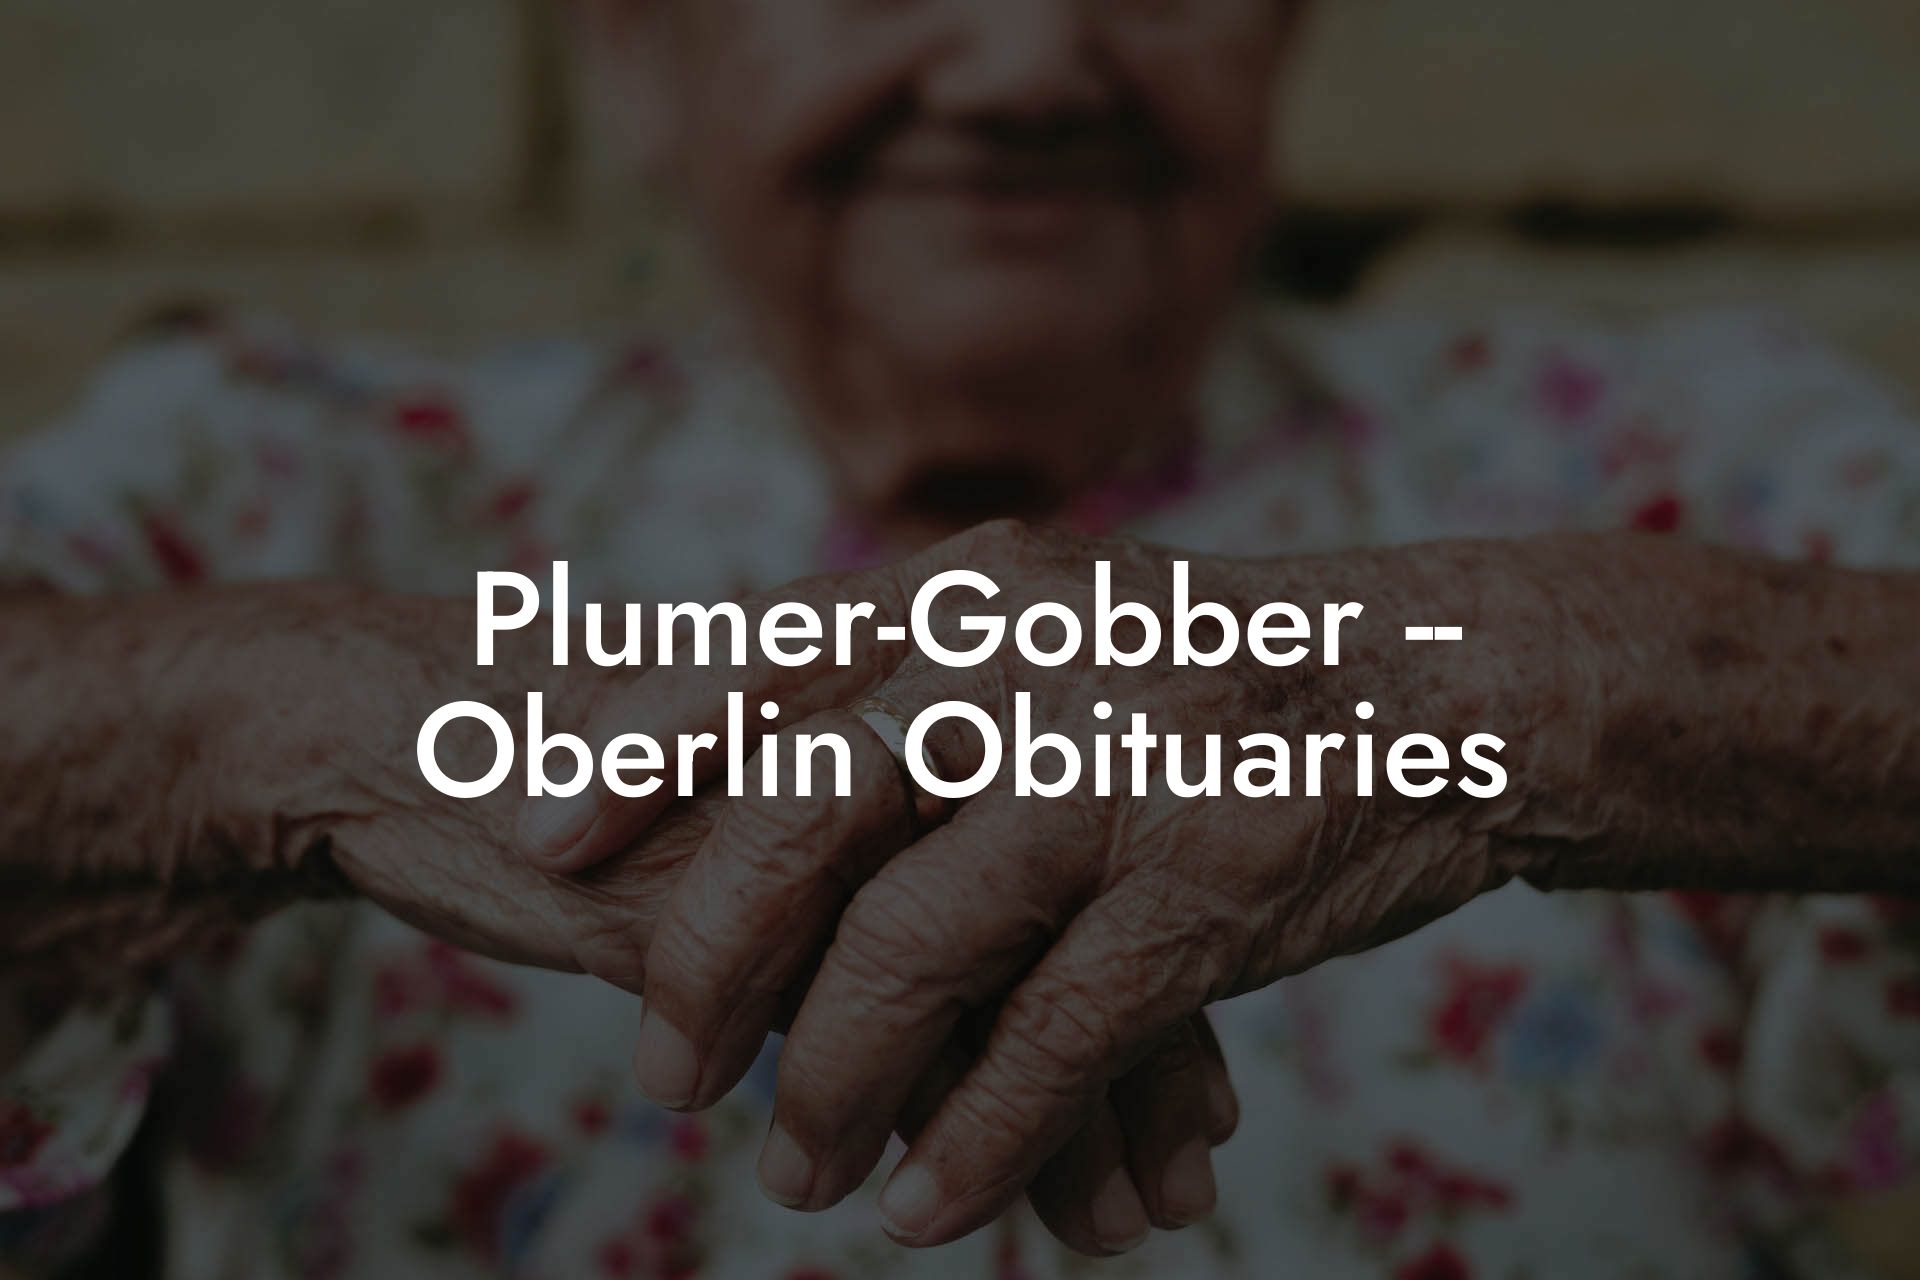 Plumer-Gobber -- Oberlin Obituaries